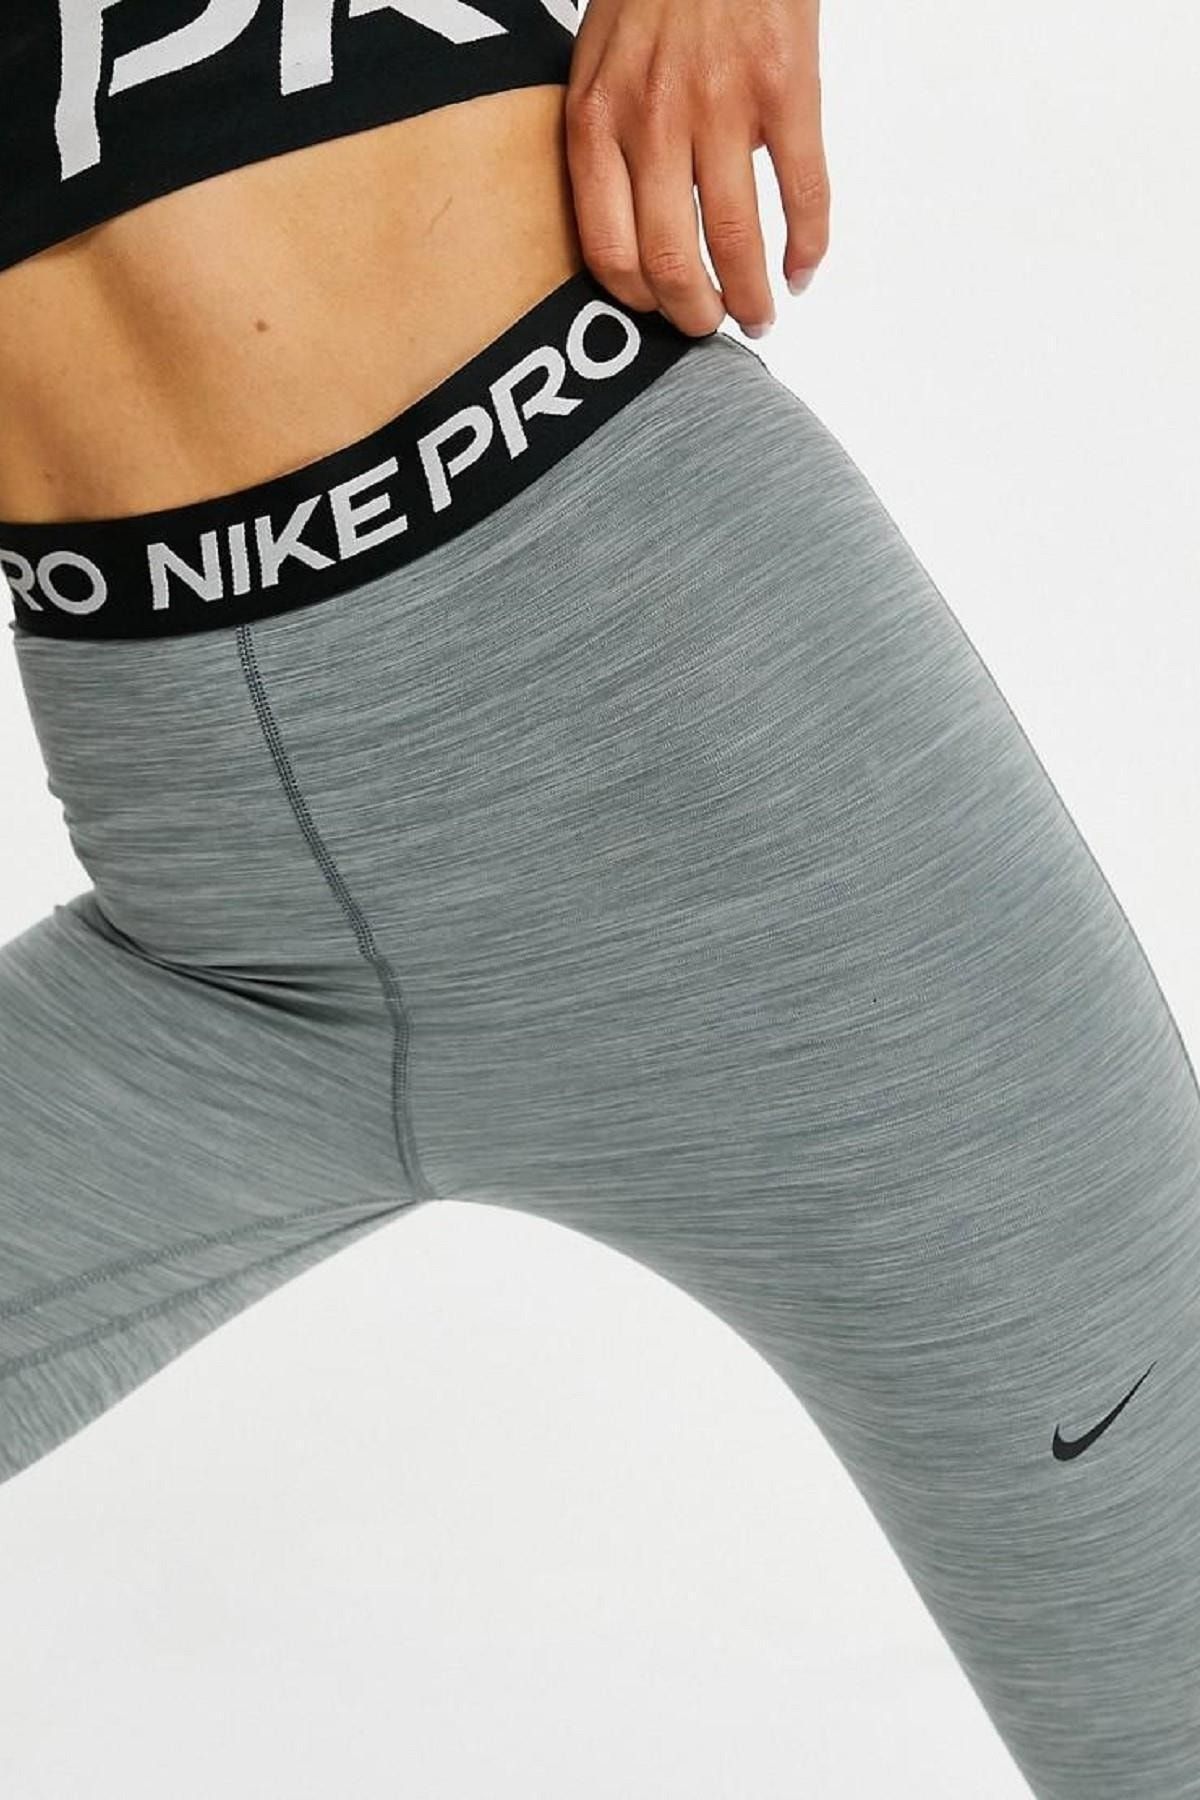 Women's leggings Nike Pro 365 Tight 7/8 Hi Rise W - smoke  grey/htr/black/black, Tennis Zone